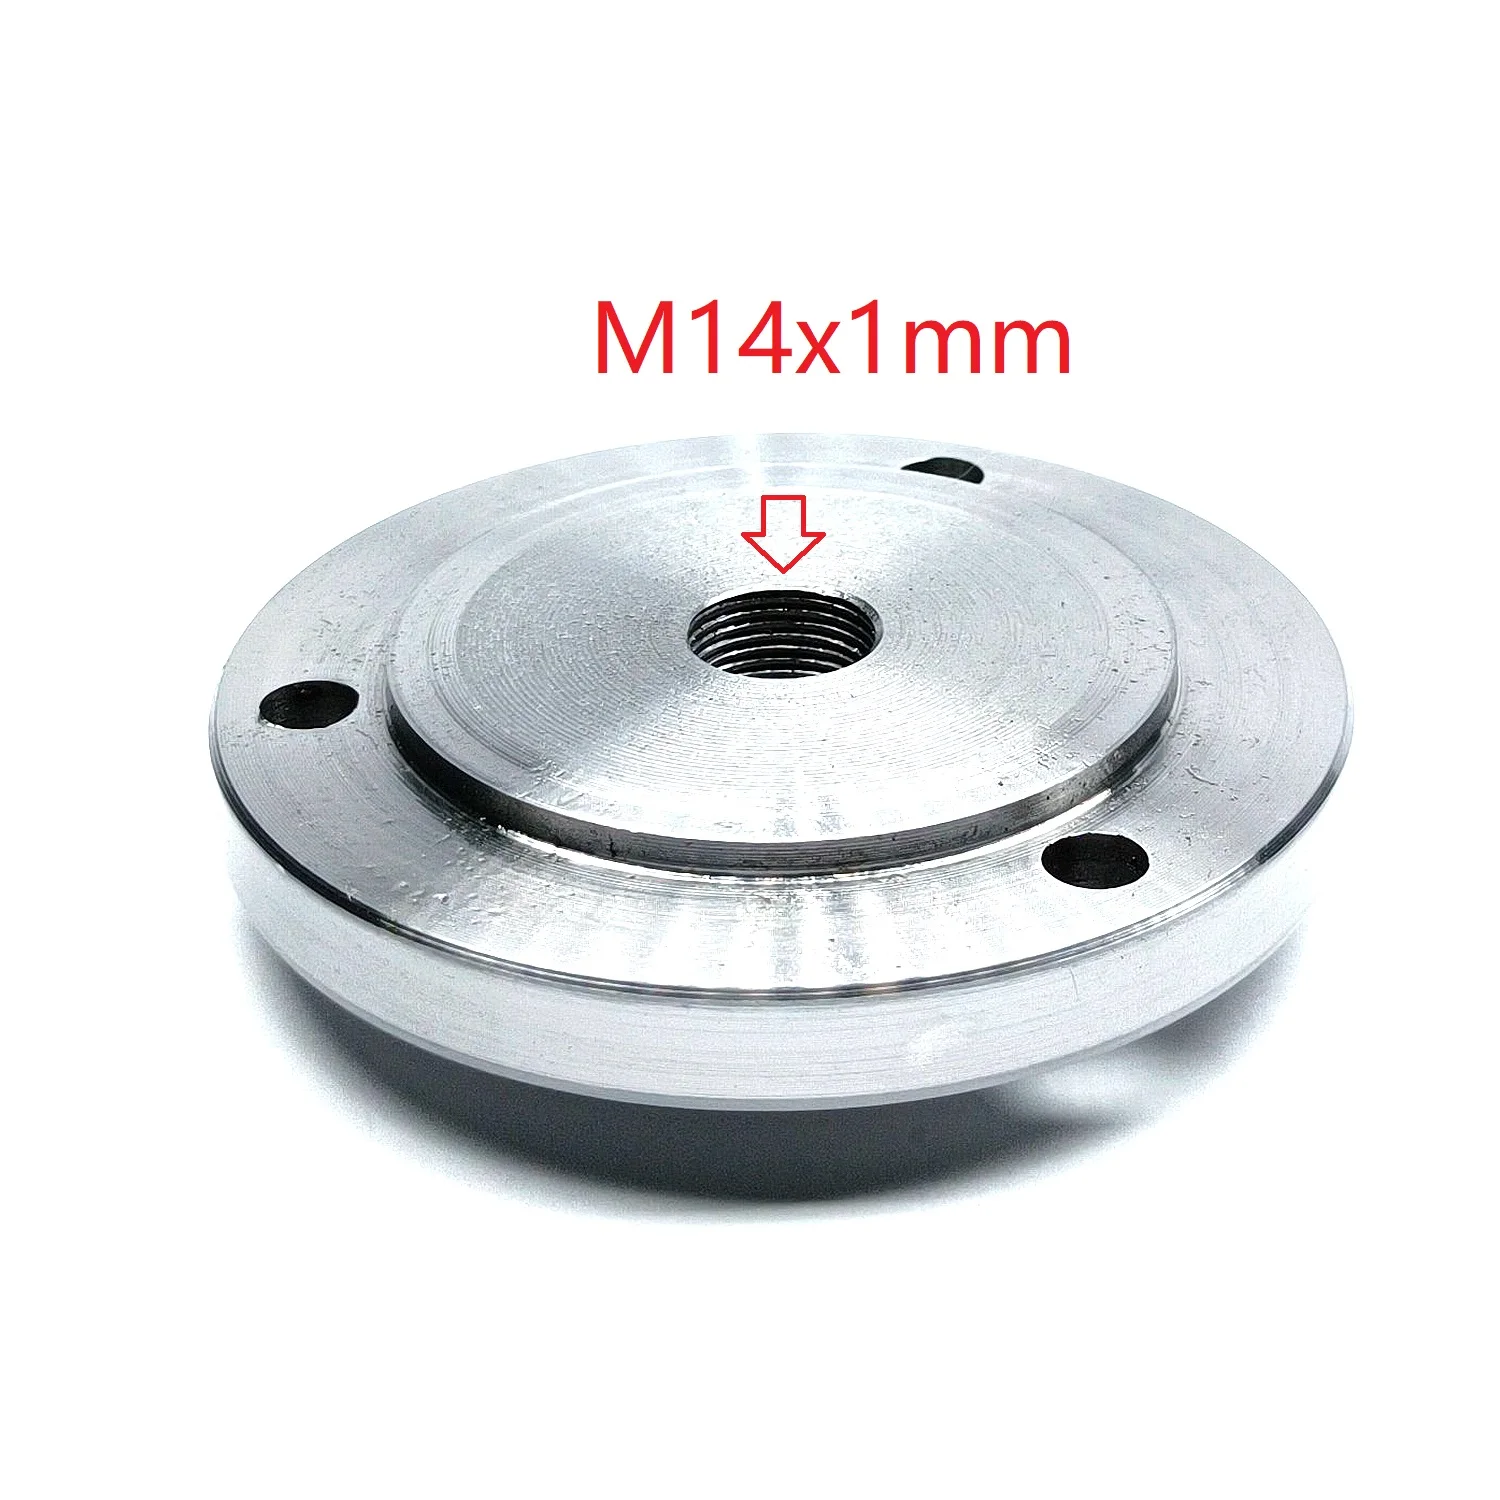 M14x1mm M14 Spindle Thread Chuck Insert Flange Back Plate Base Adapter K11-80 K12-80 K11-100 K12-100